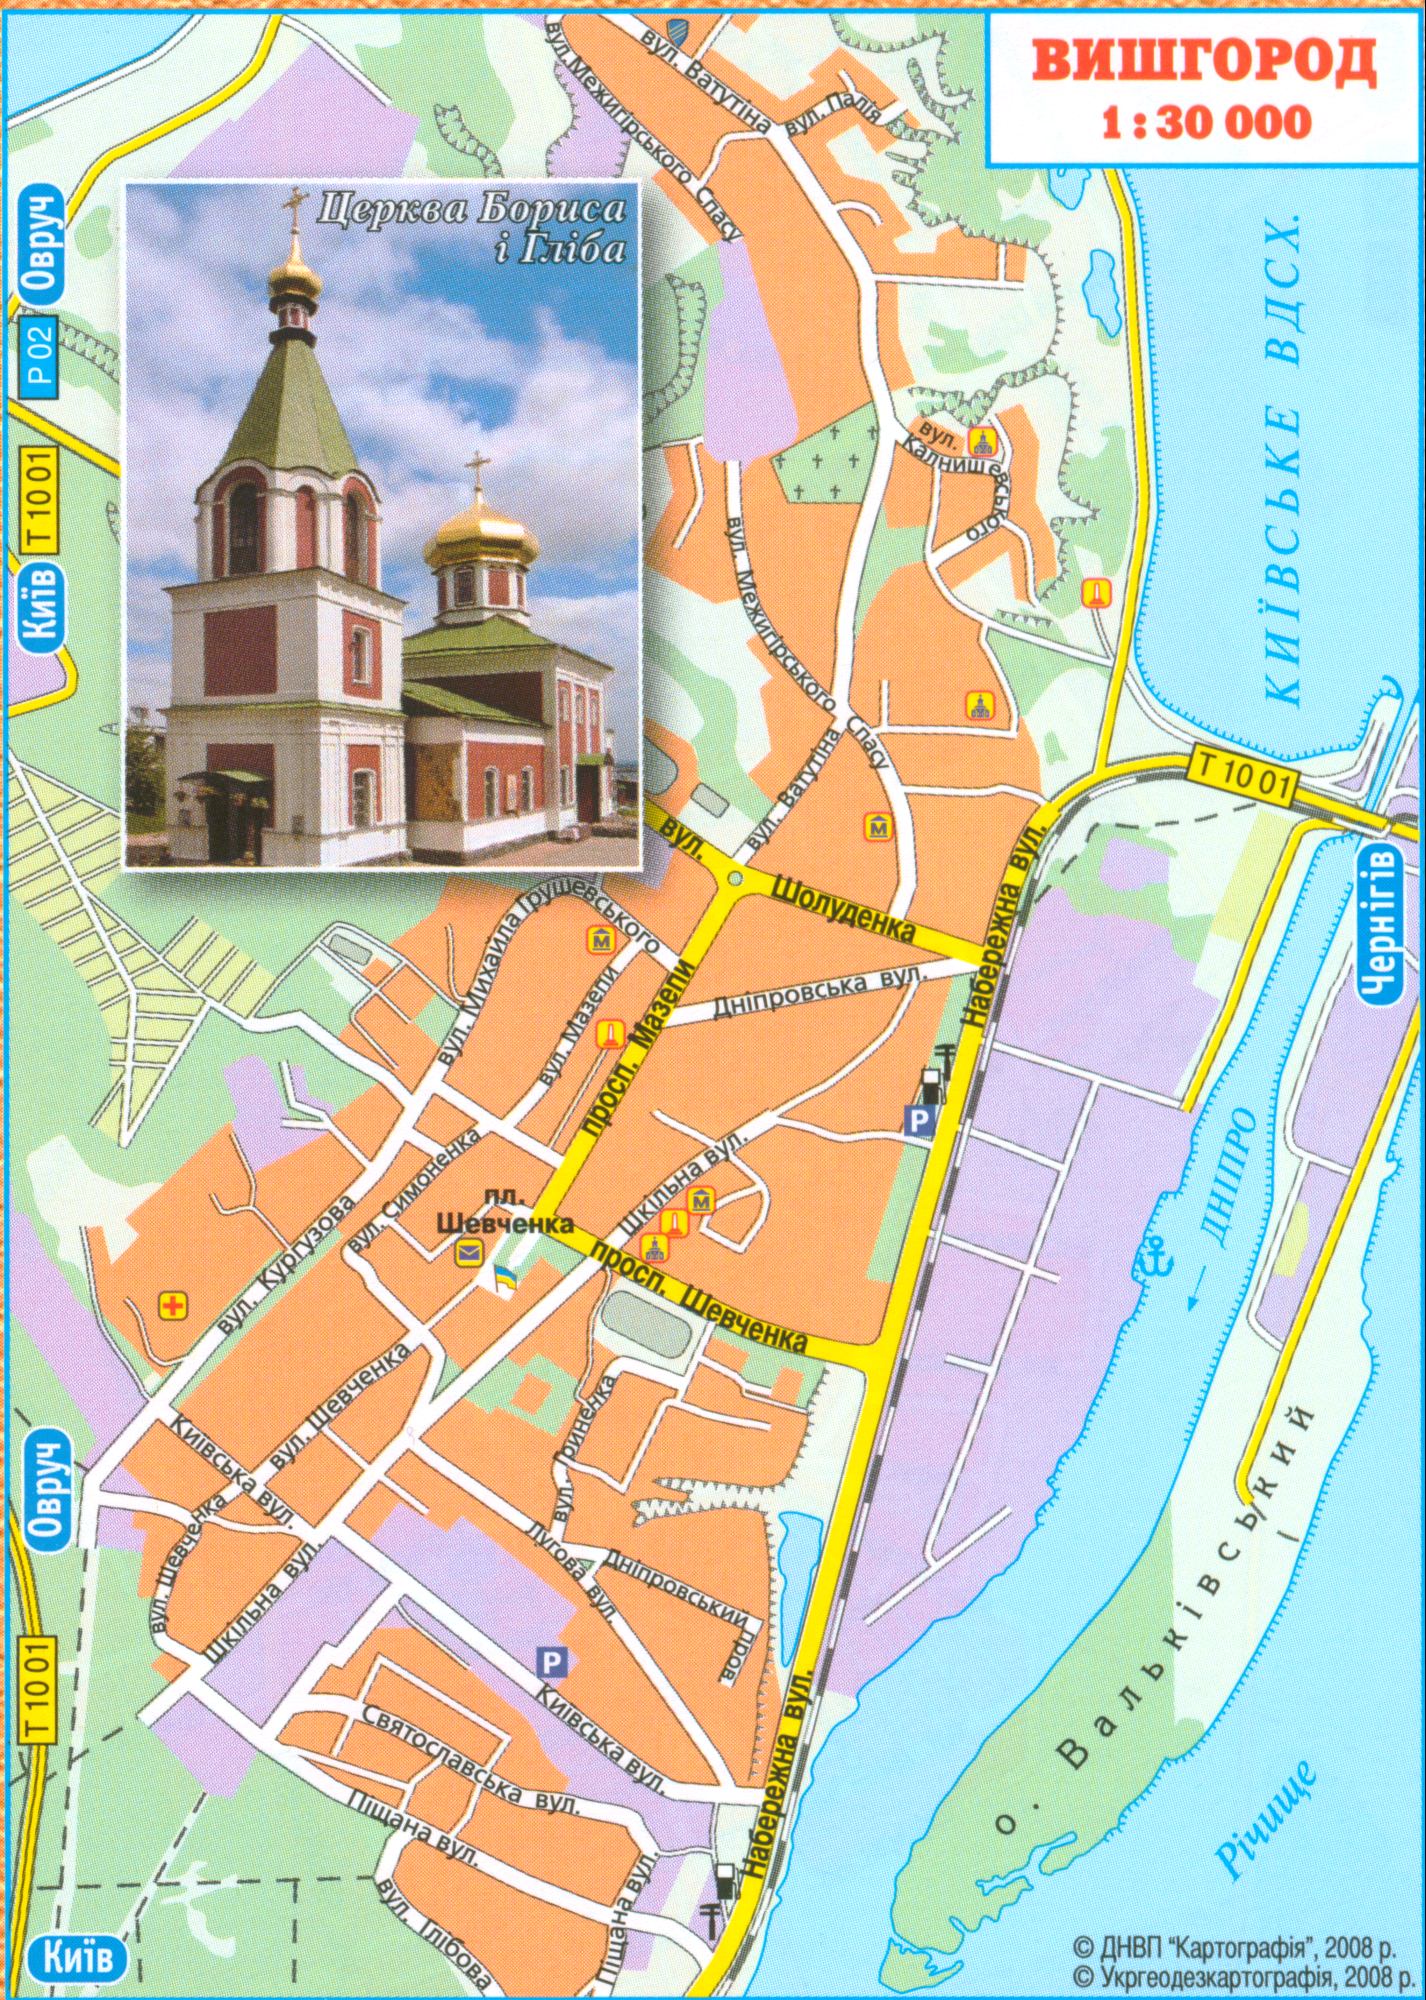 Karte Vyshgorod Region Kiew. Street Map Vyshgorod Maßstab 1cm: 300m, Straßen, Richtungen. Kostenlos herunterladen